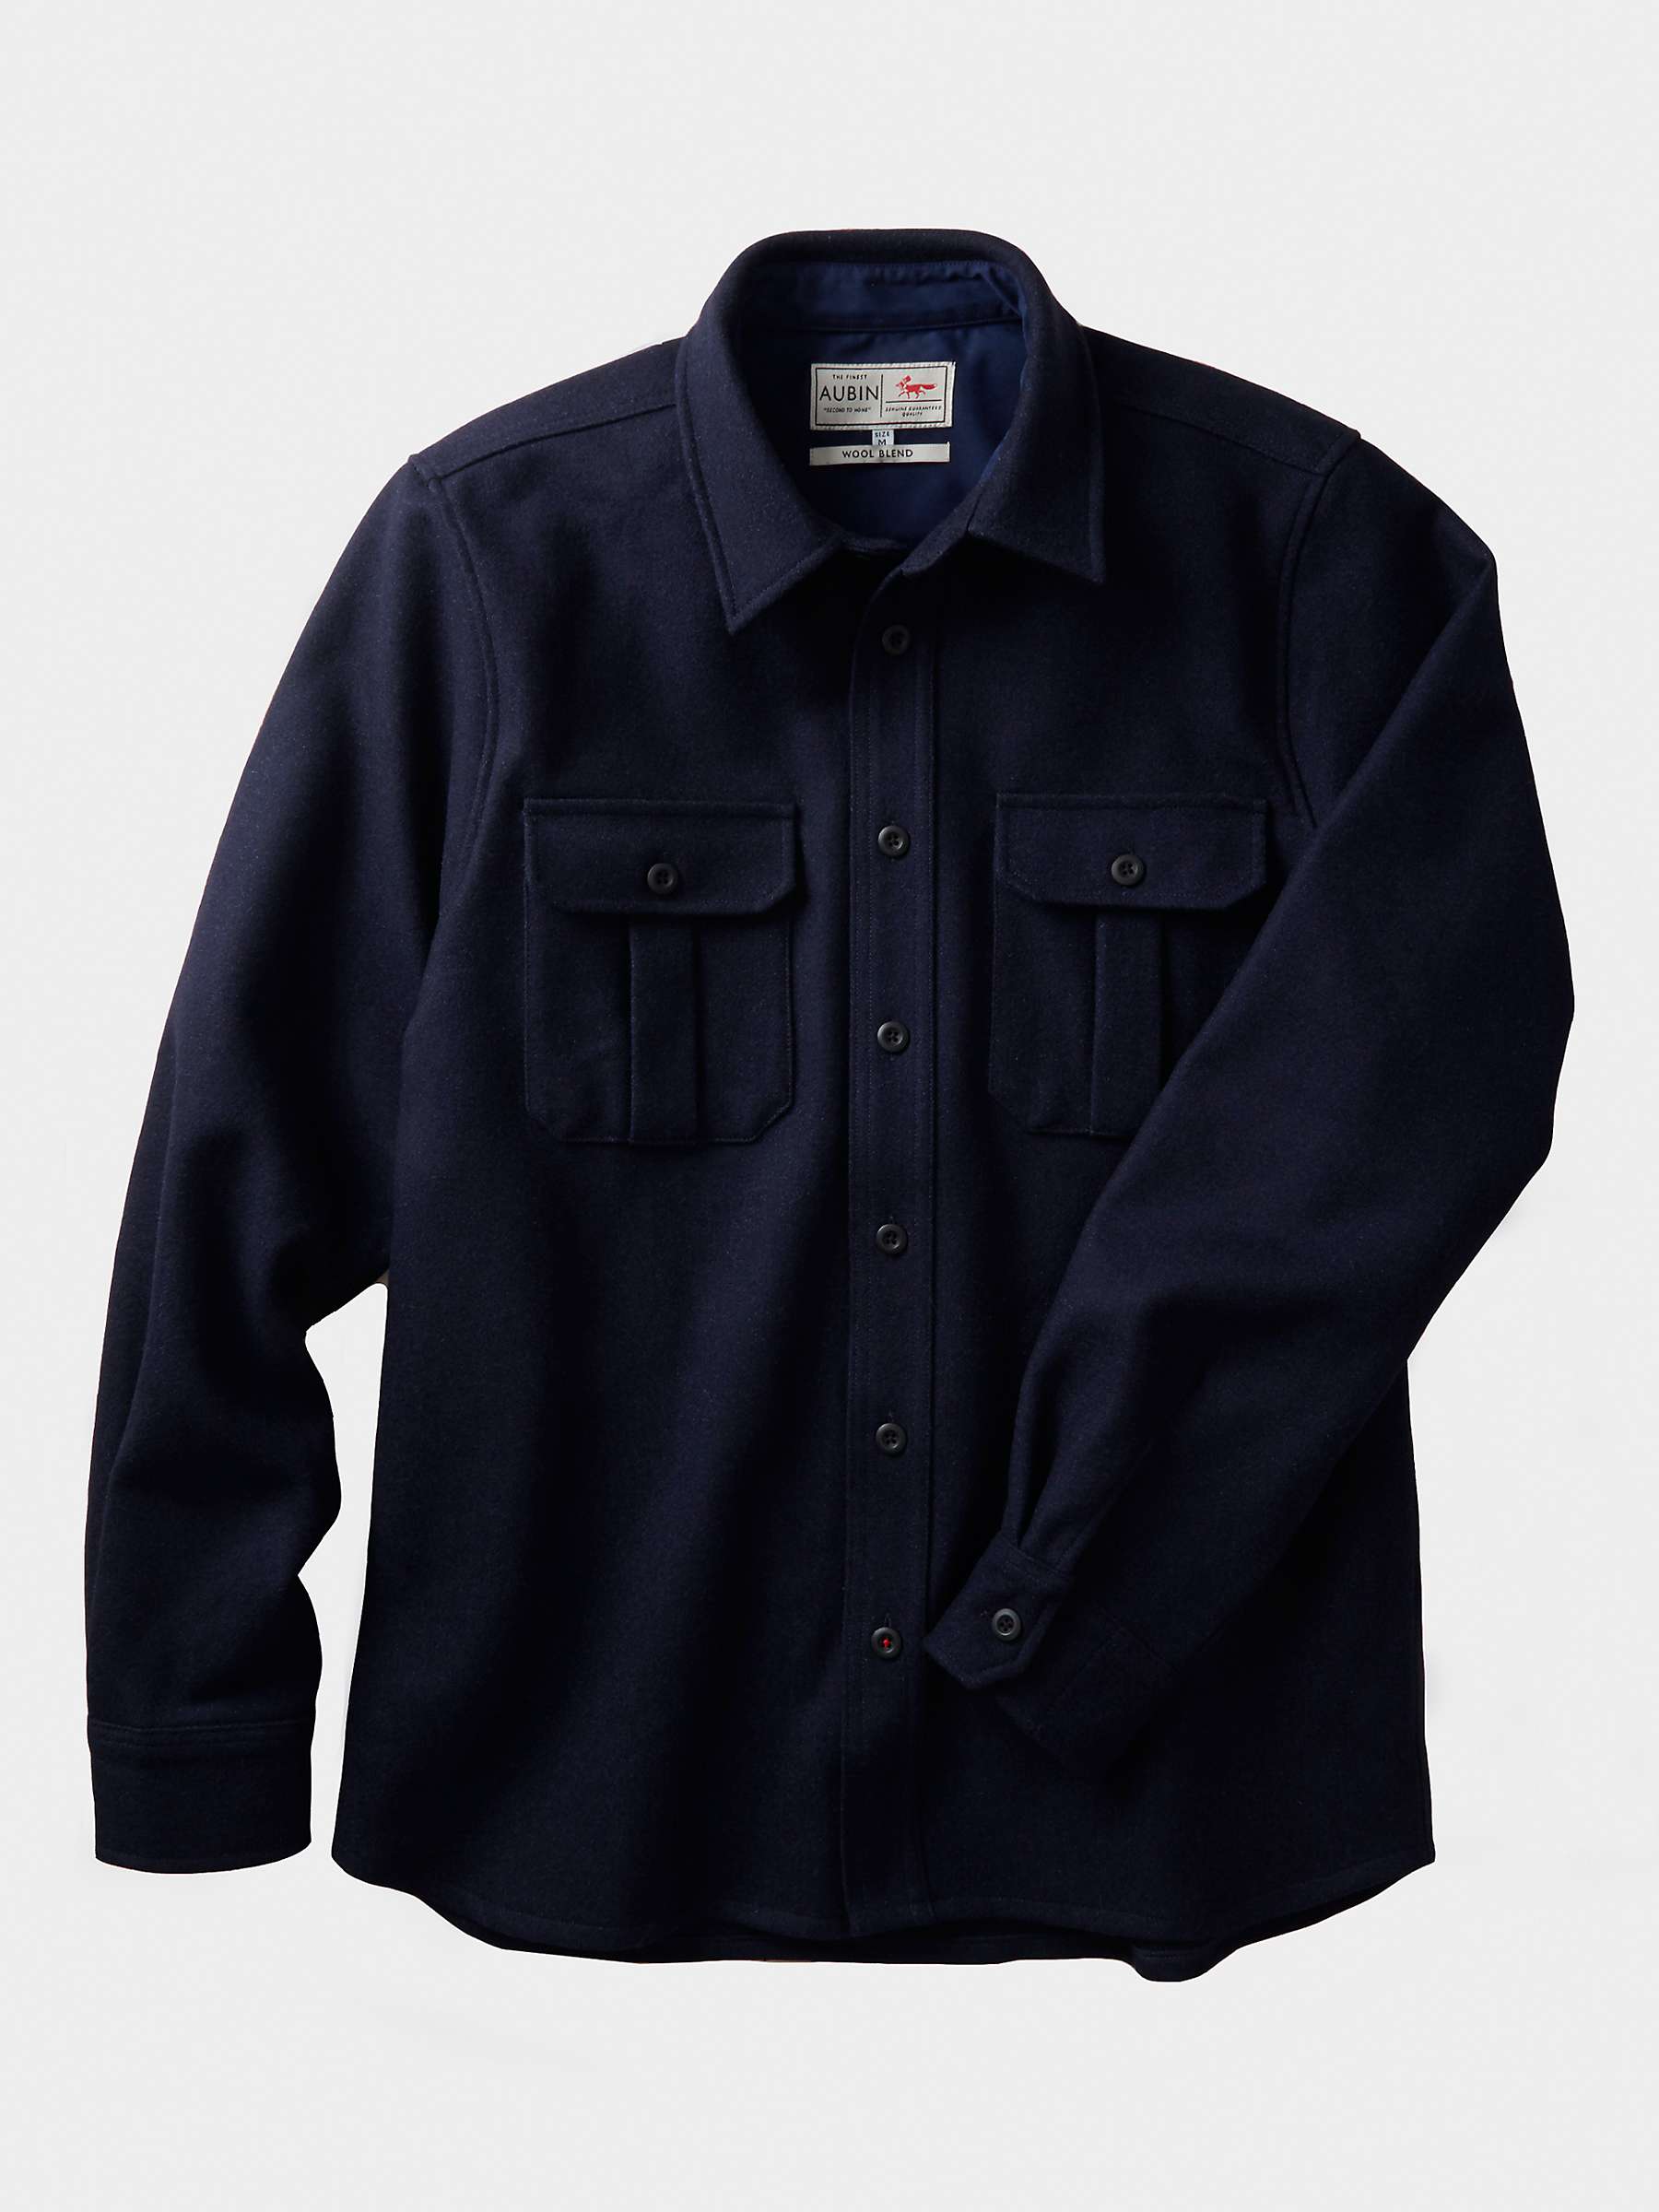 Buy Aubin Lyaghts Wool Overshirt, Navy Online at johnlewis.com